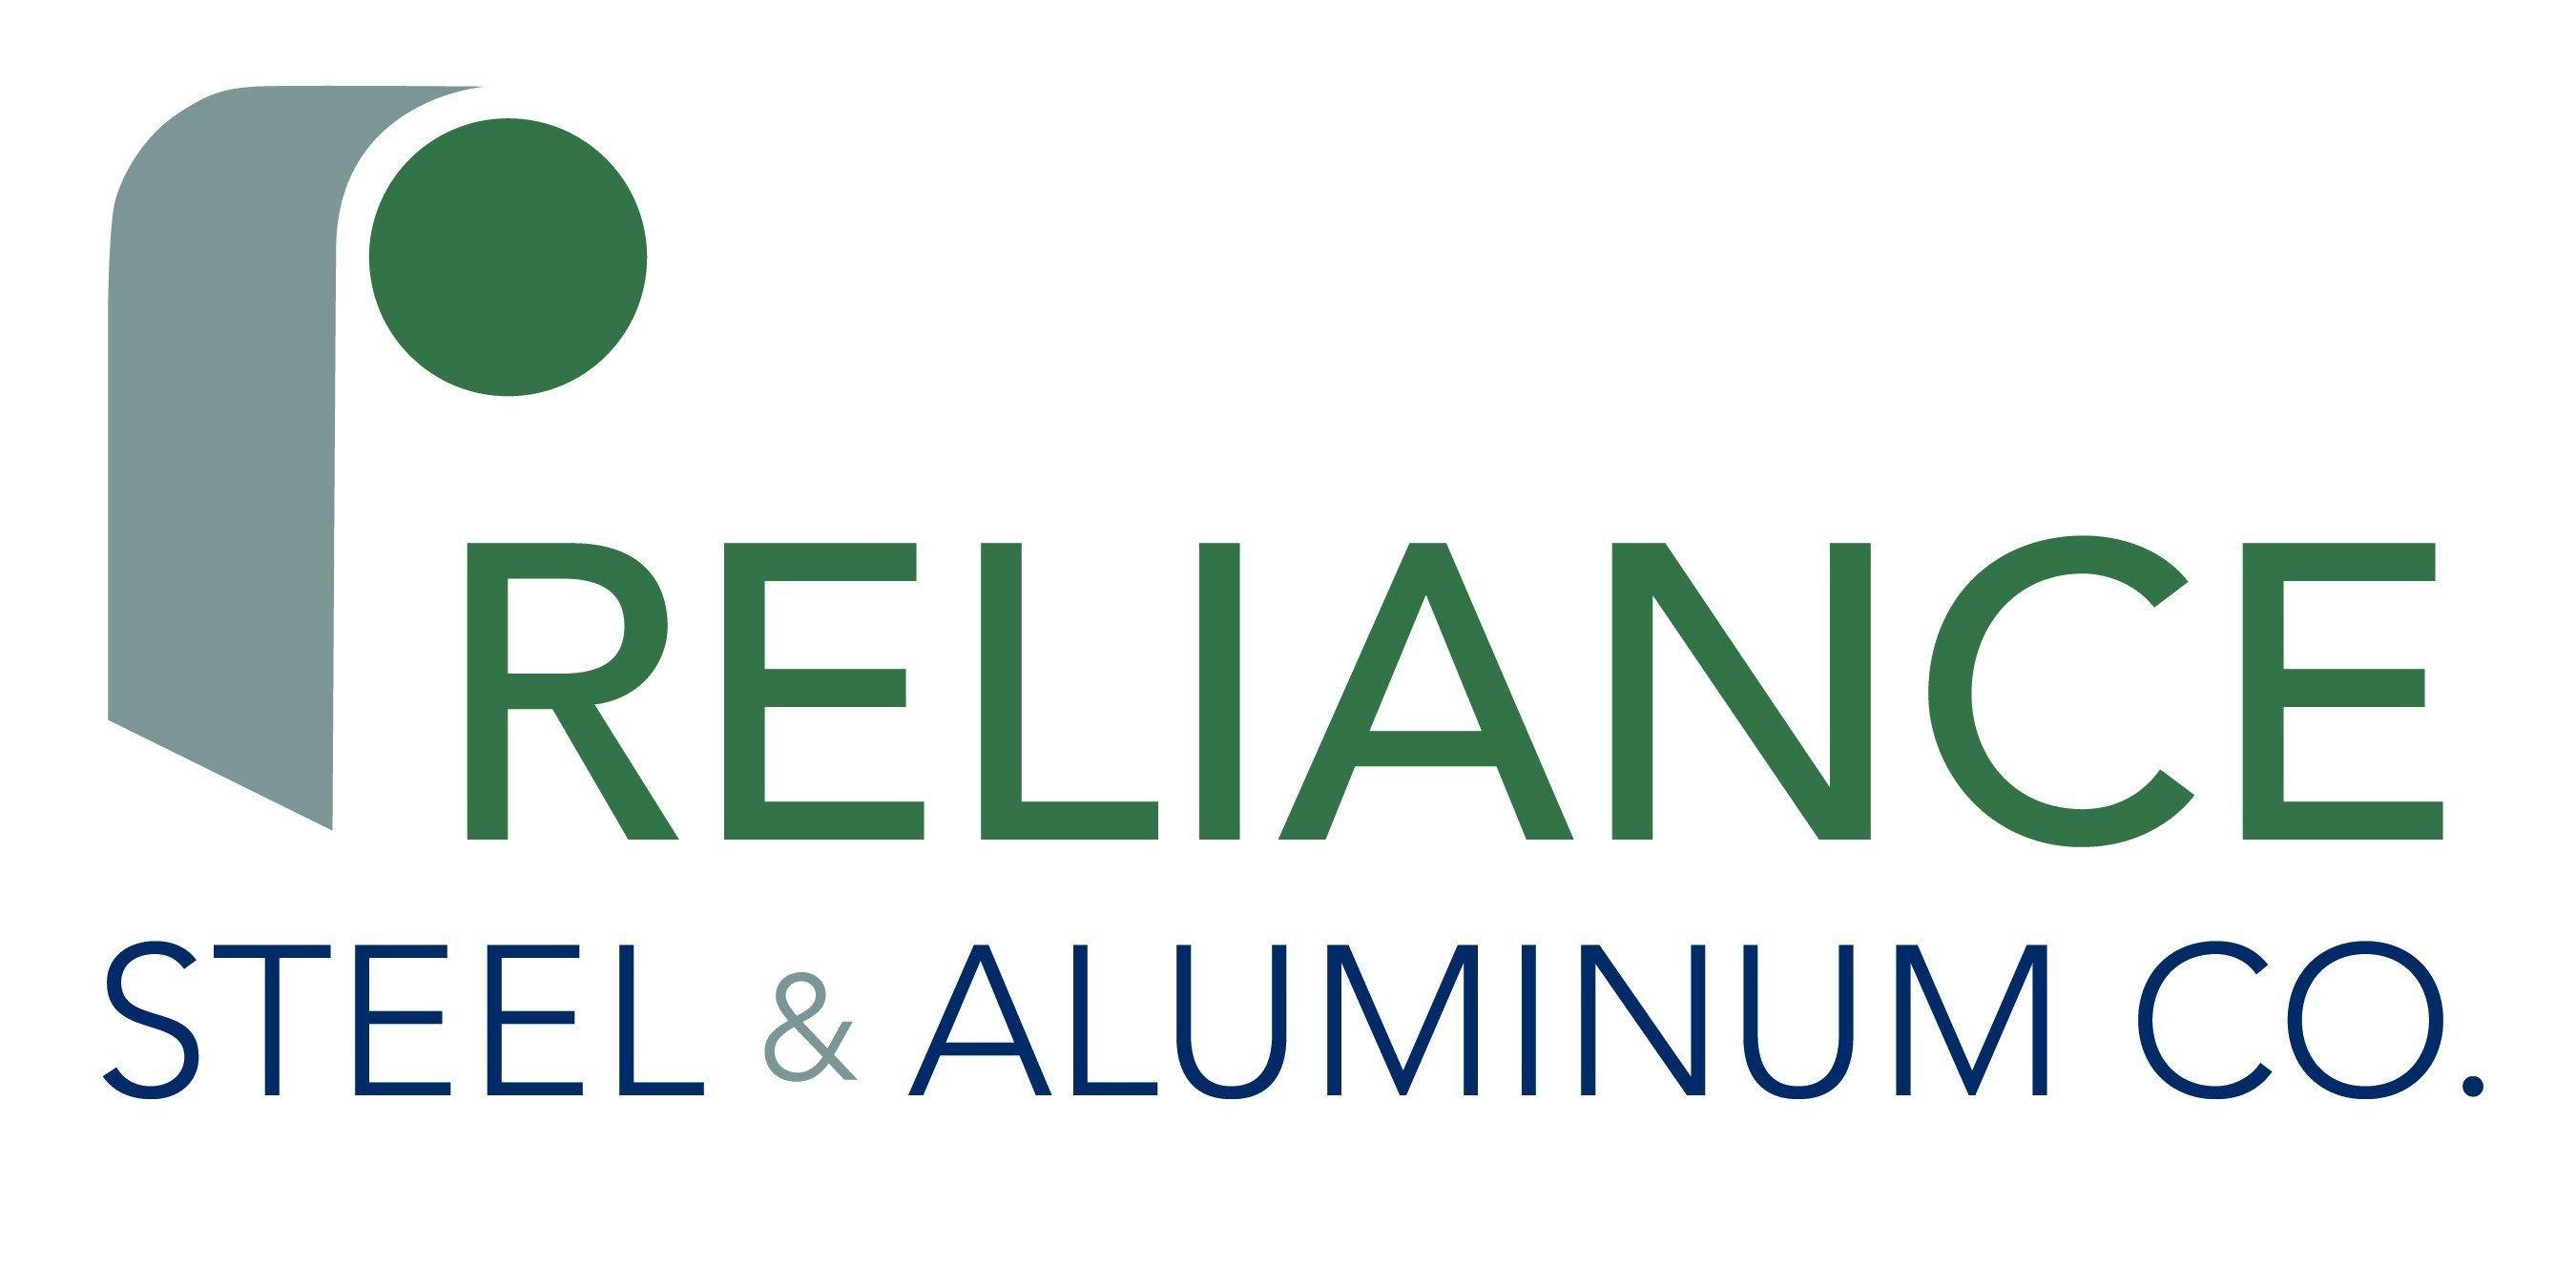 Aluminum Company Logo - Reliance Steel & Aluminum Co. Completes Acquisition Of Alaska Steel ...